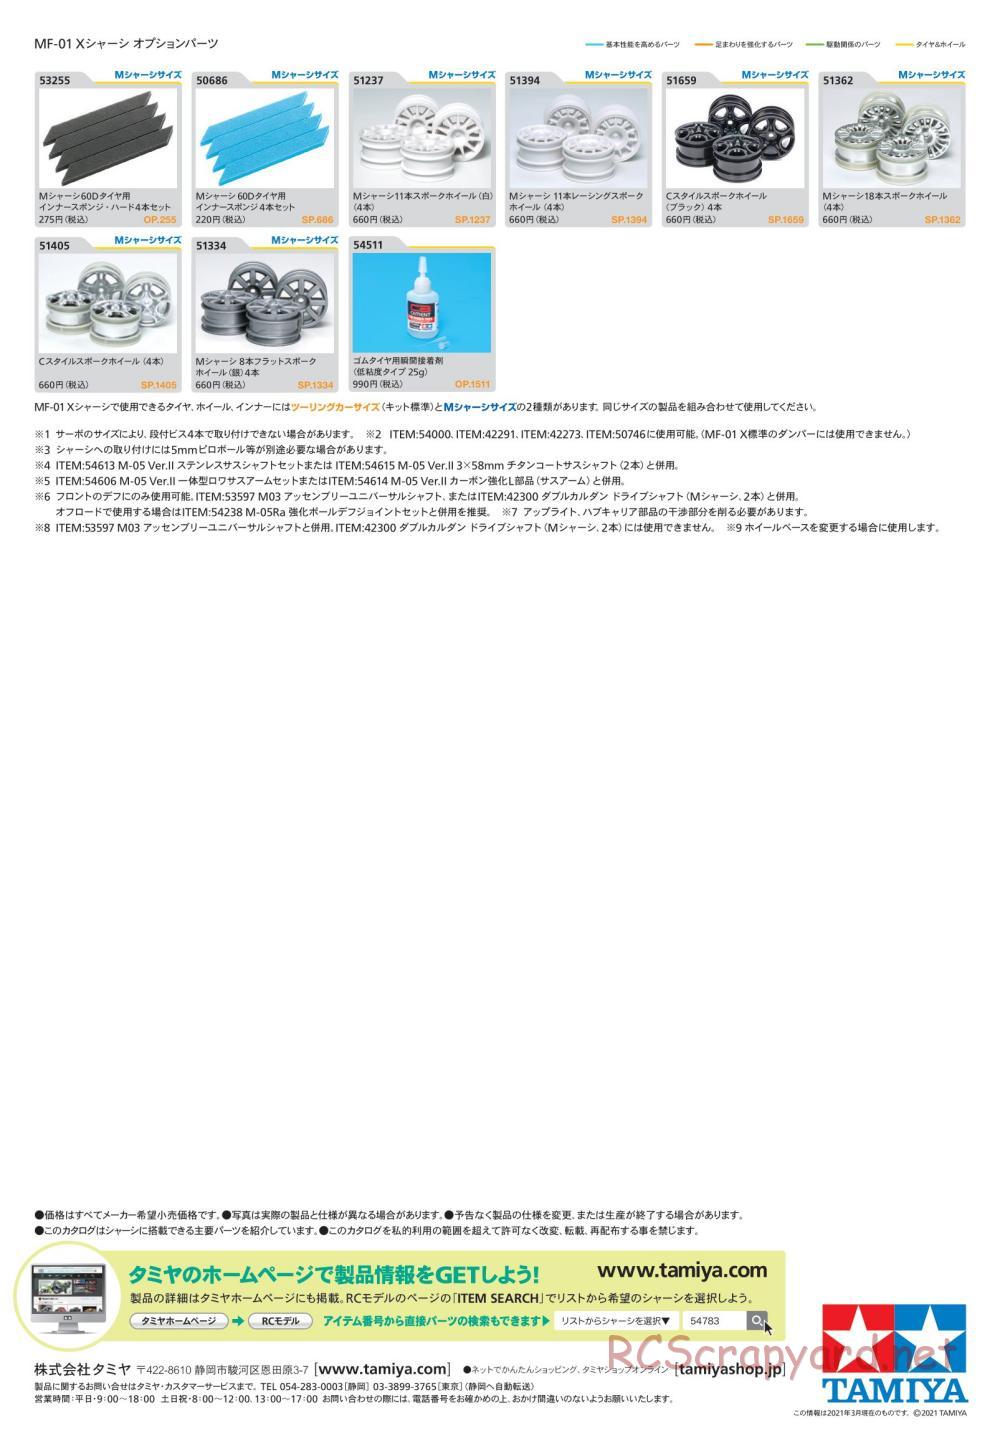 Tamiya - MF-01X Chassis - Option Parts - Page 3